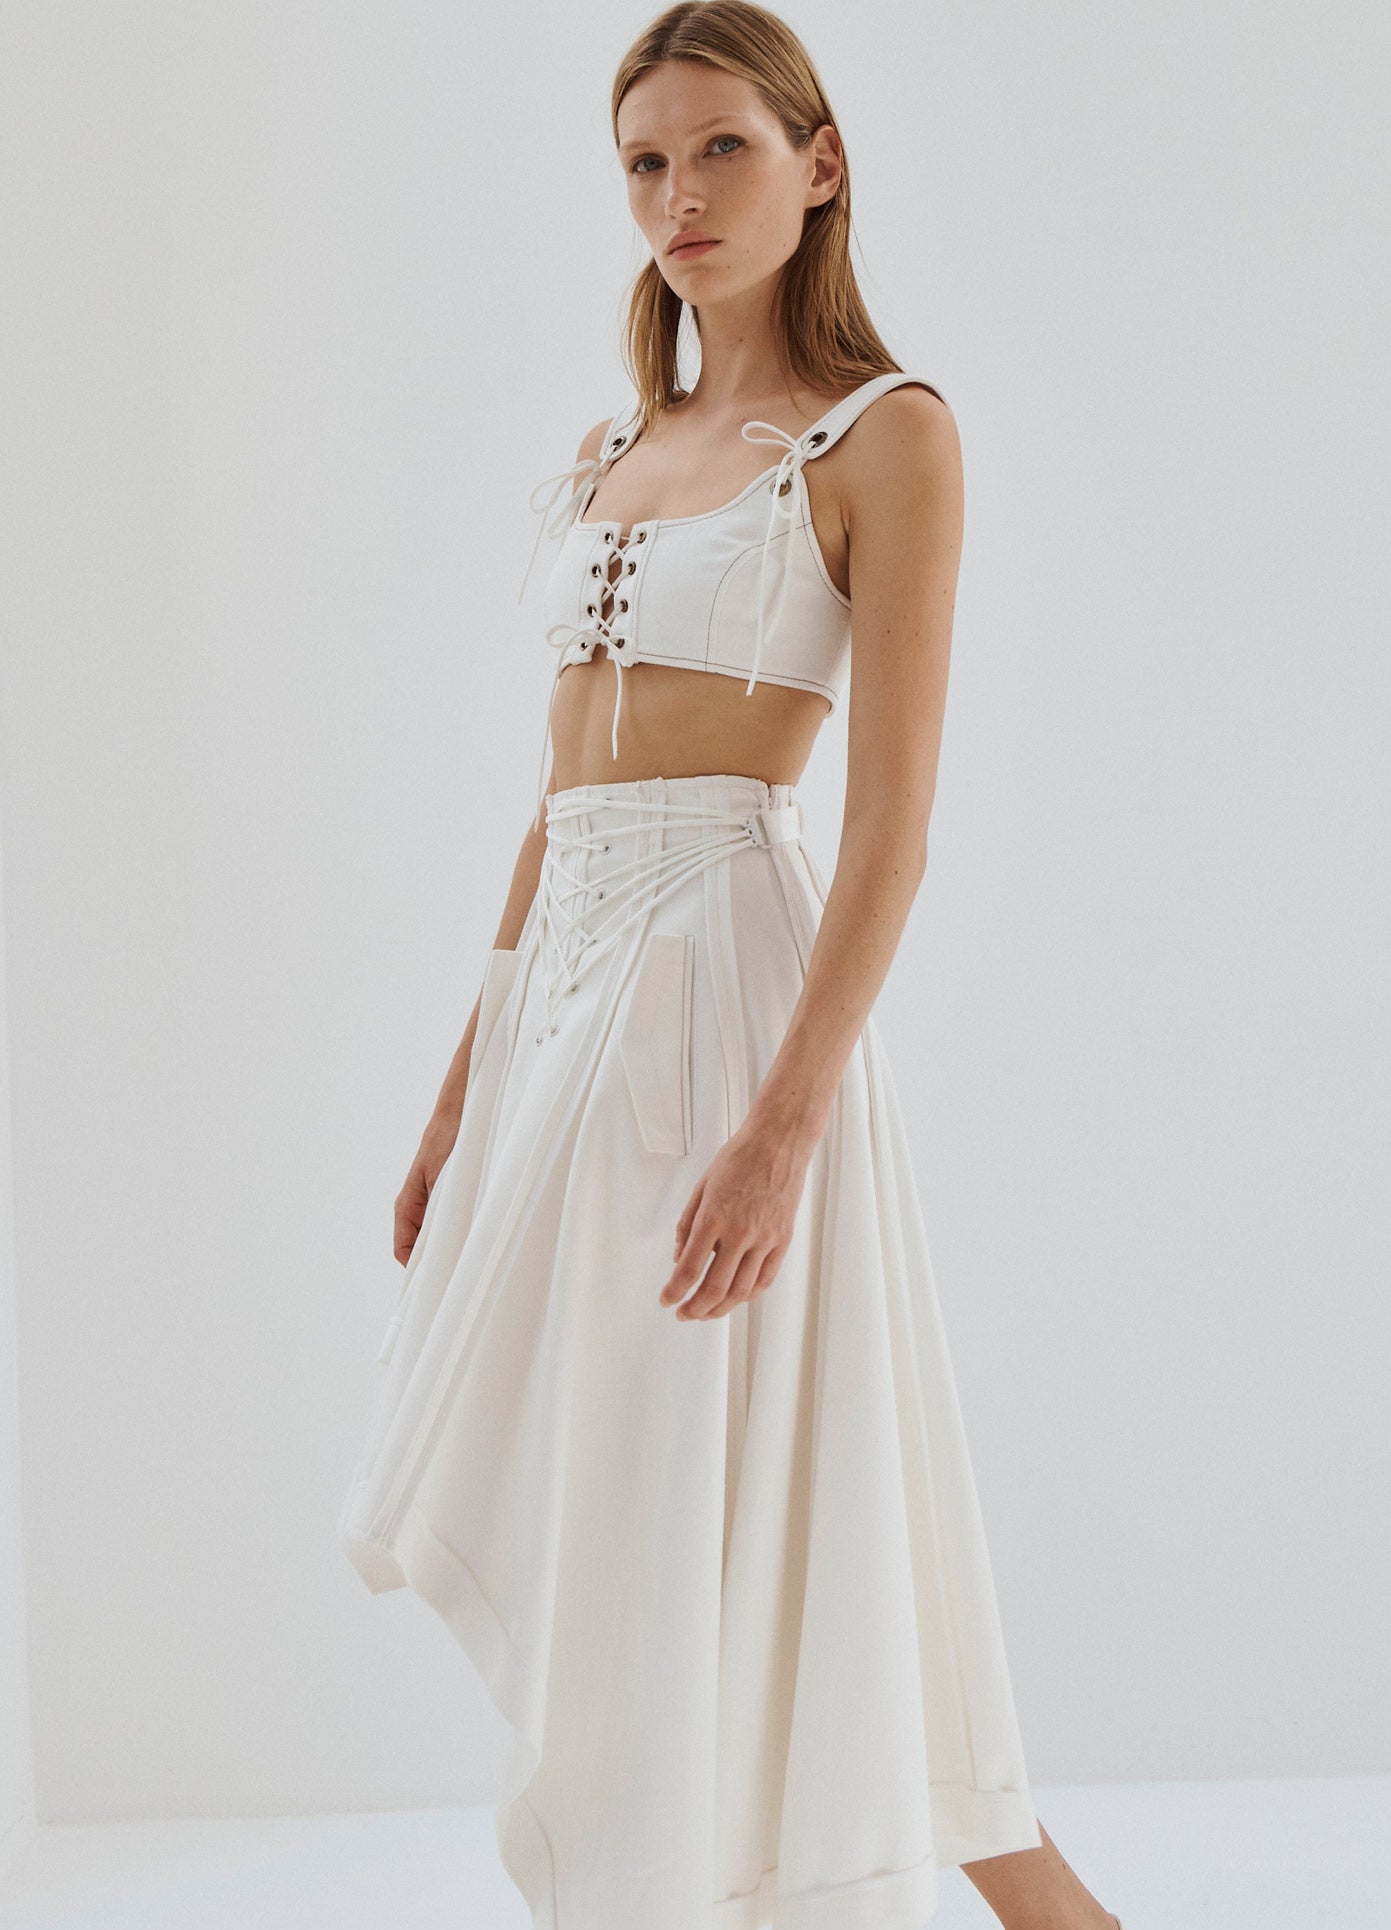 MONSE Laced Up Asymmetrical Hem Skirt in White on Model Side View